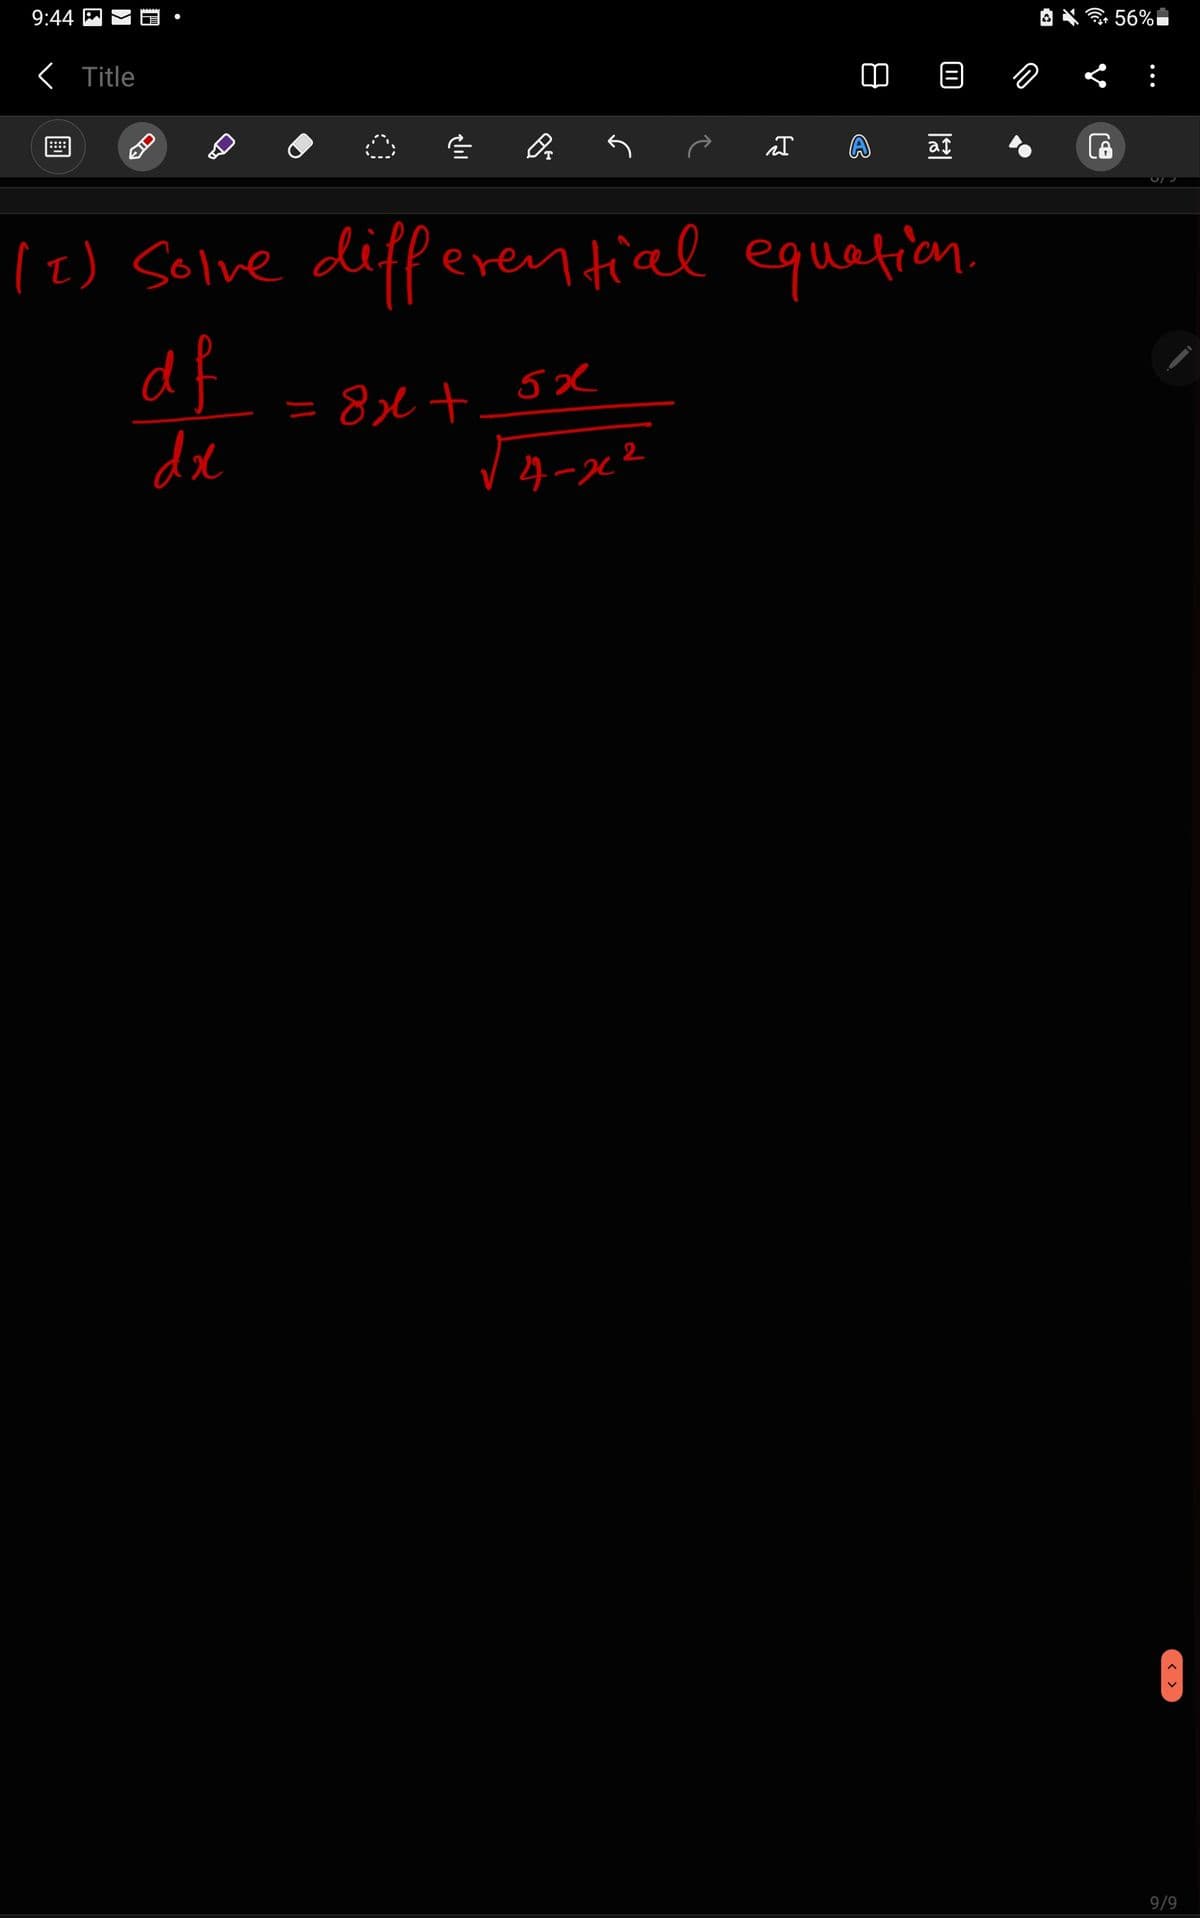 9:44
56%
< Title
:
:::
at
Iz) Solve differen tial equation.
d
8l + 52
de
2
9/9
< >
